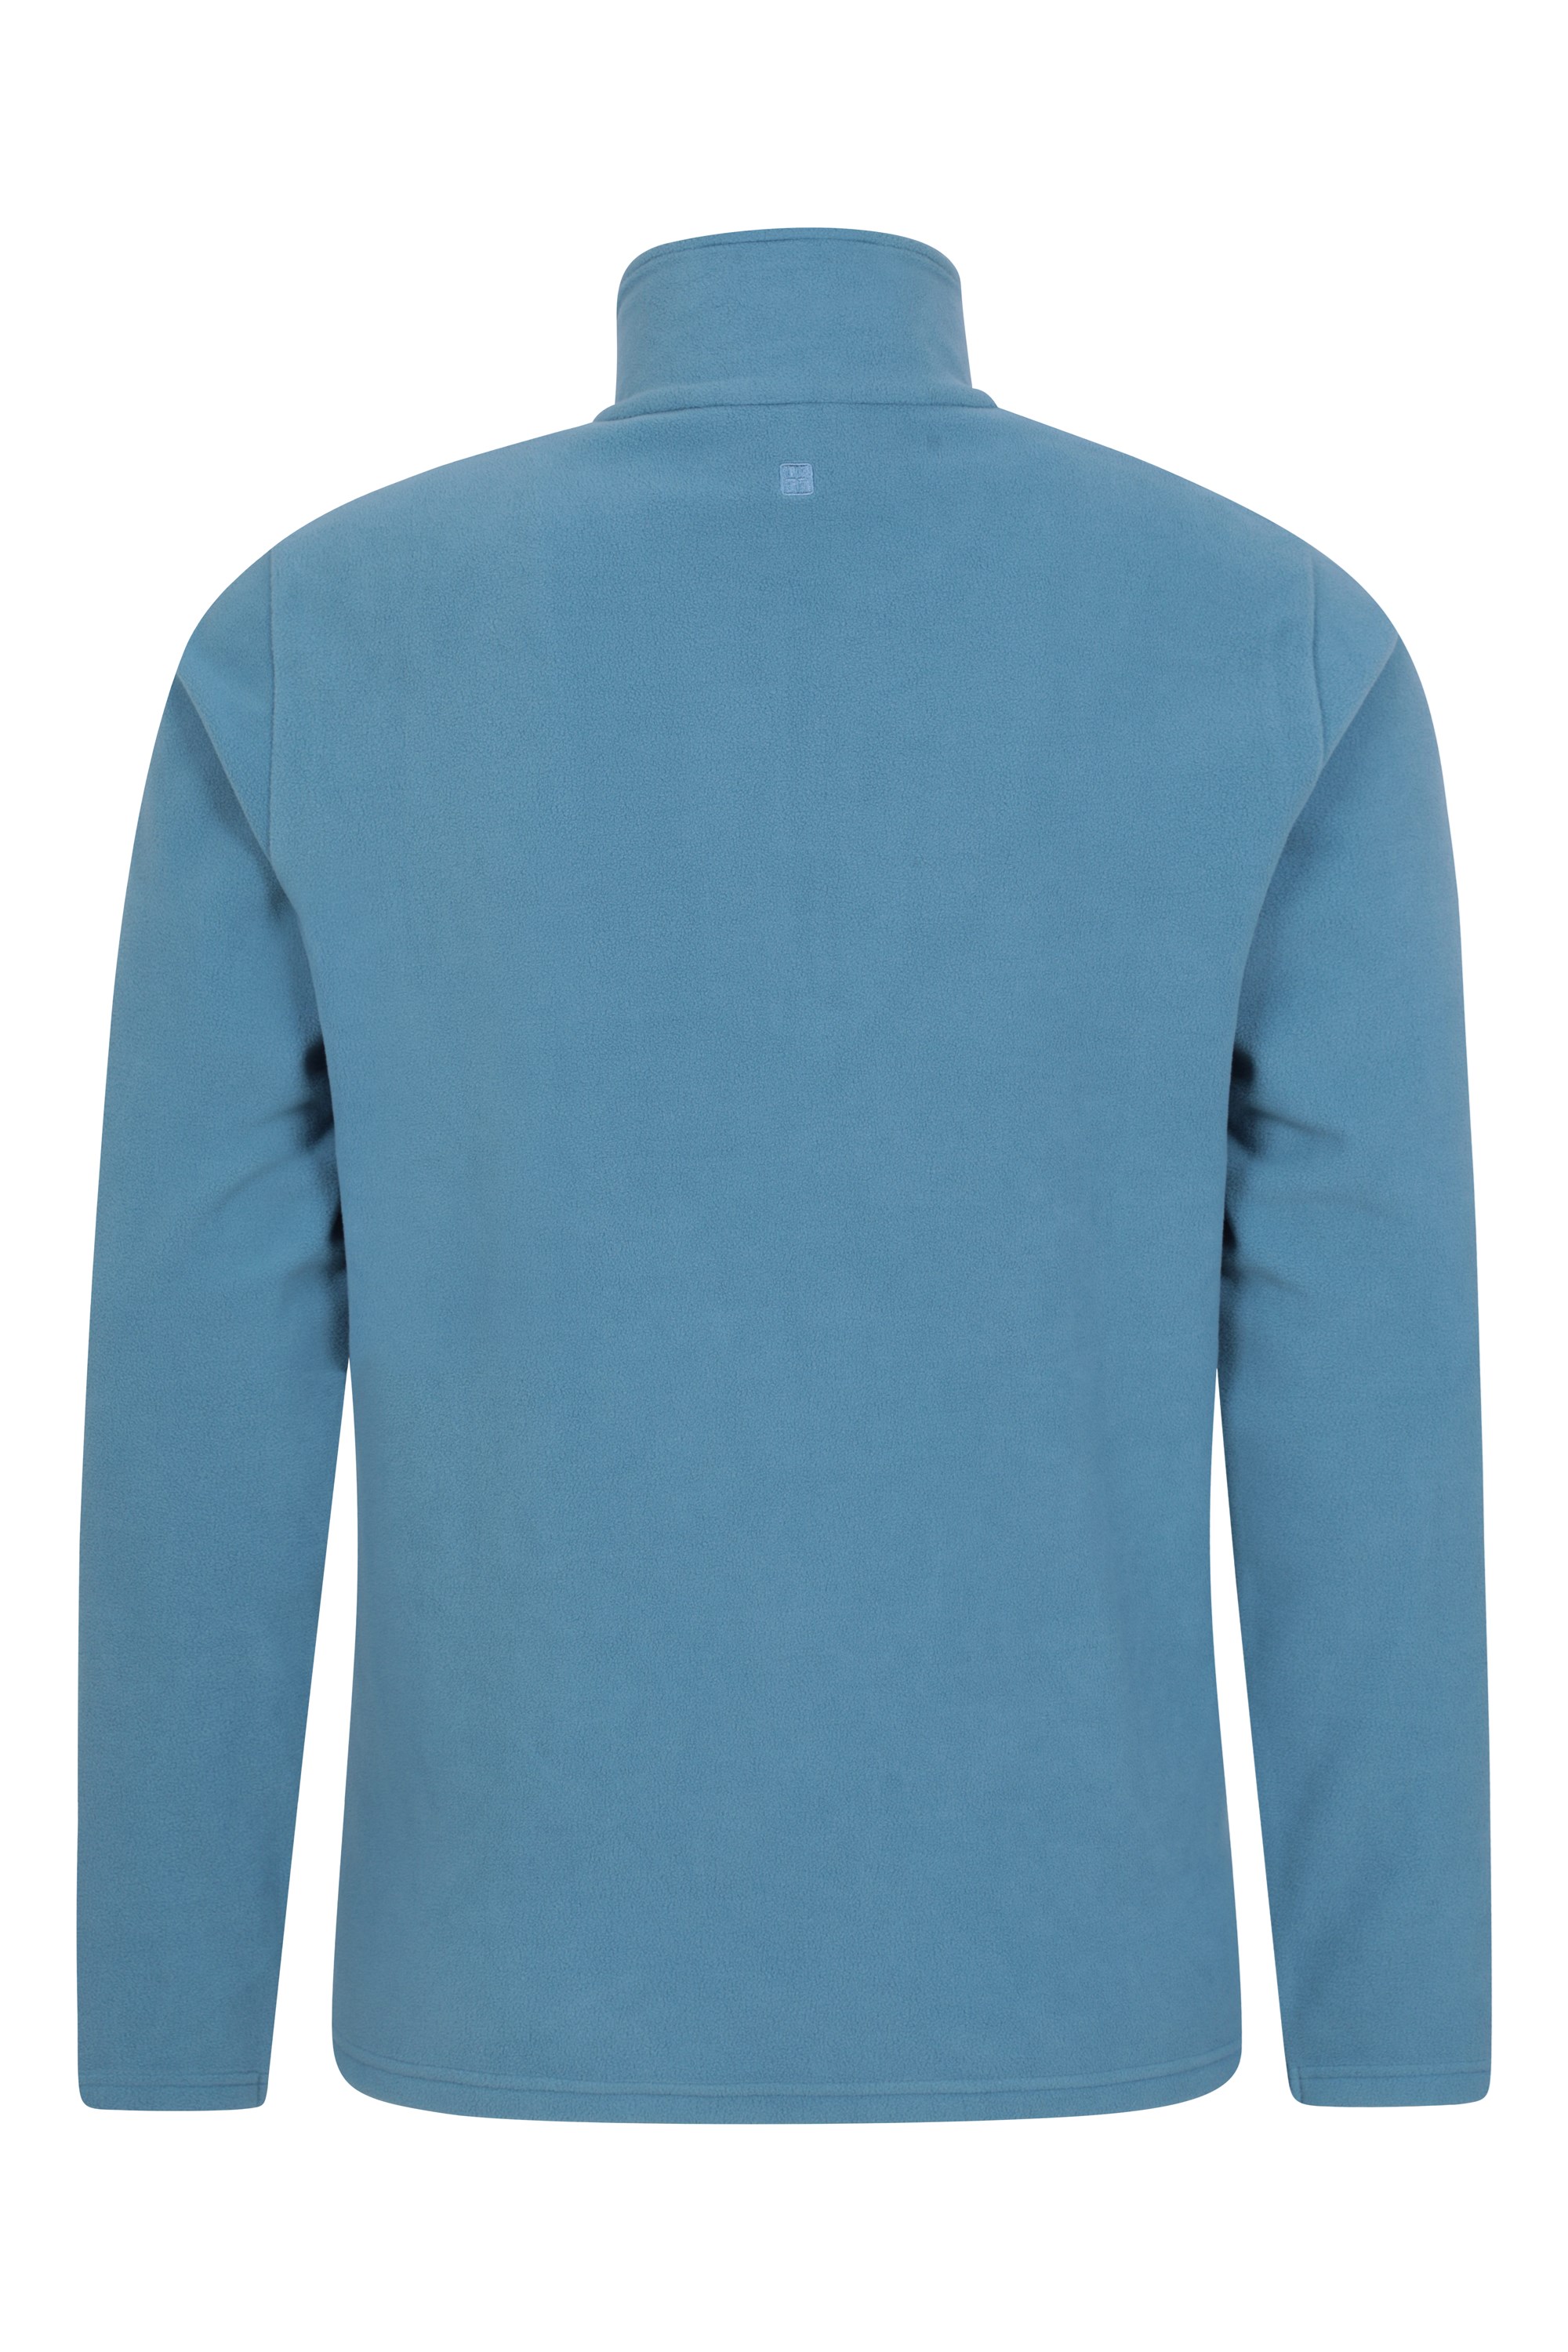 Mountain Warehouse Men's Camber Fleece Top Lightweight Breathable Casual  Sweater